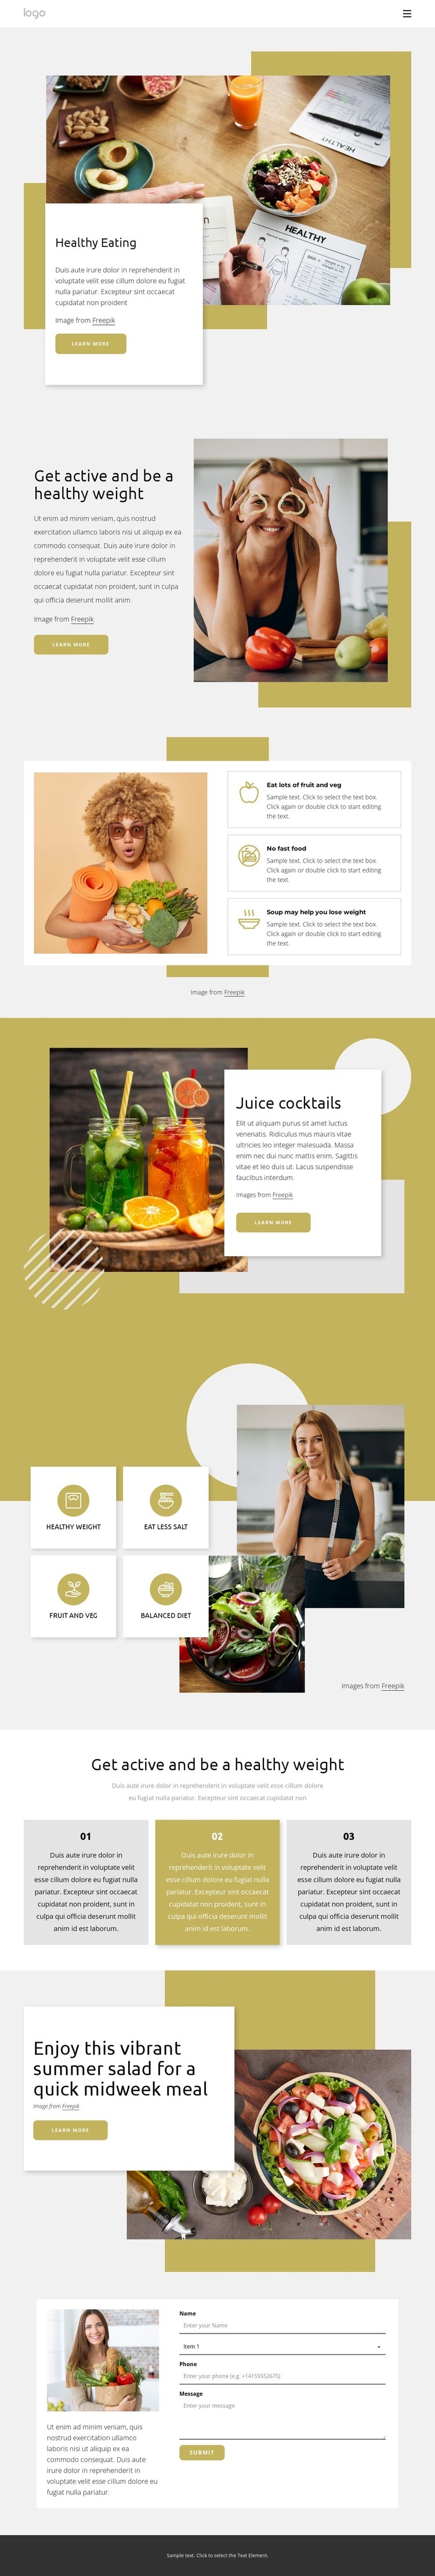 Focus on healthy eating Homepage Design